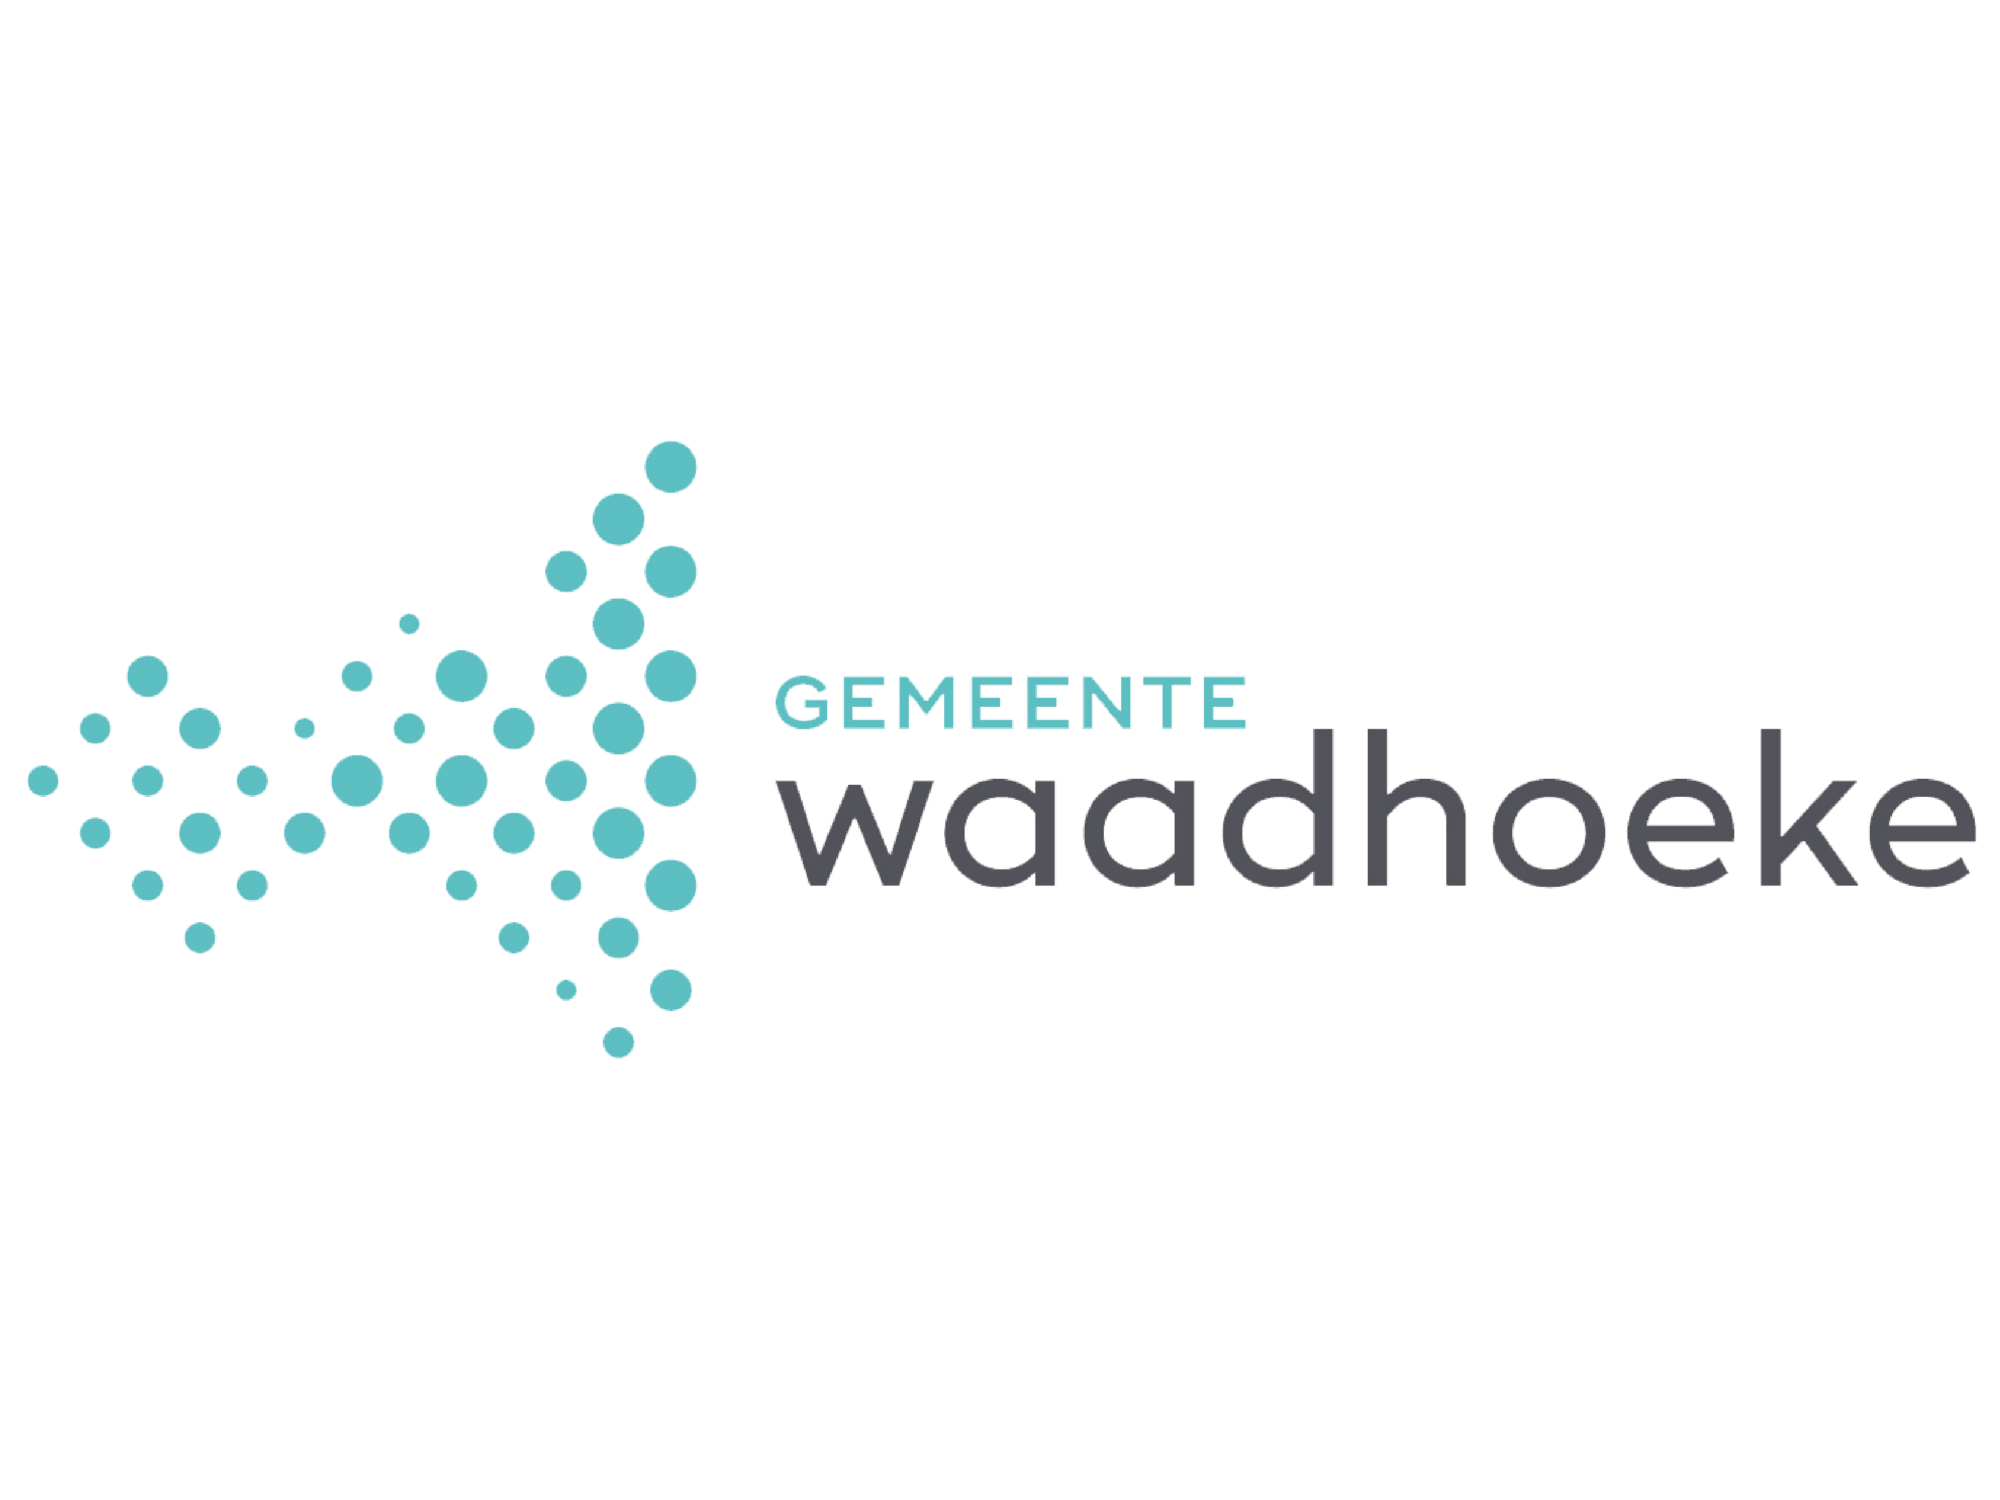 Municipality of Waadhoeke